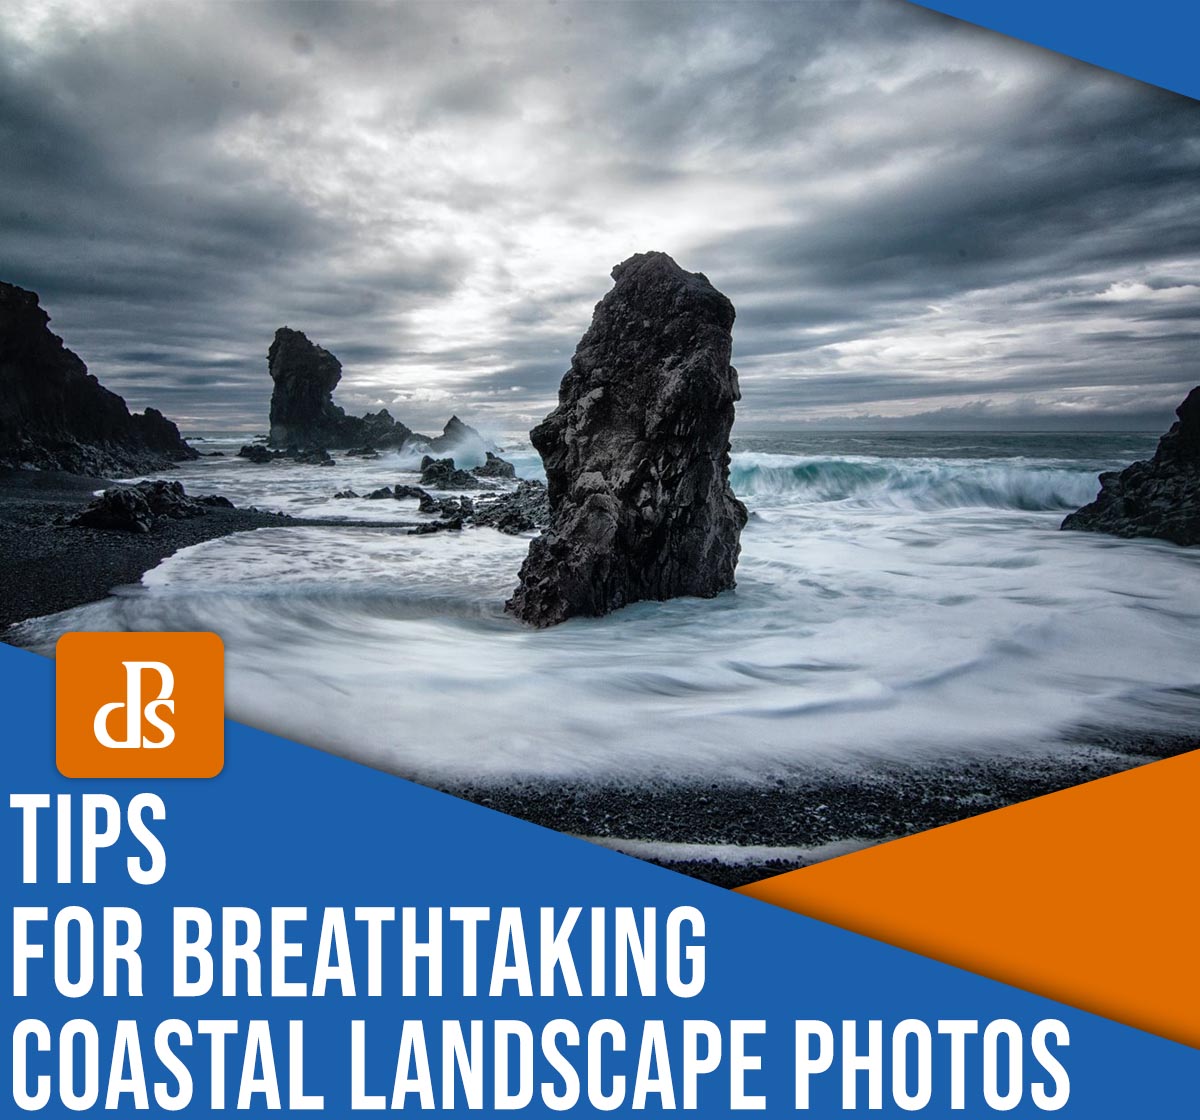 Tips for breathtaking coastal landscape photos